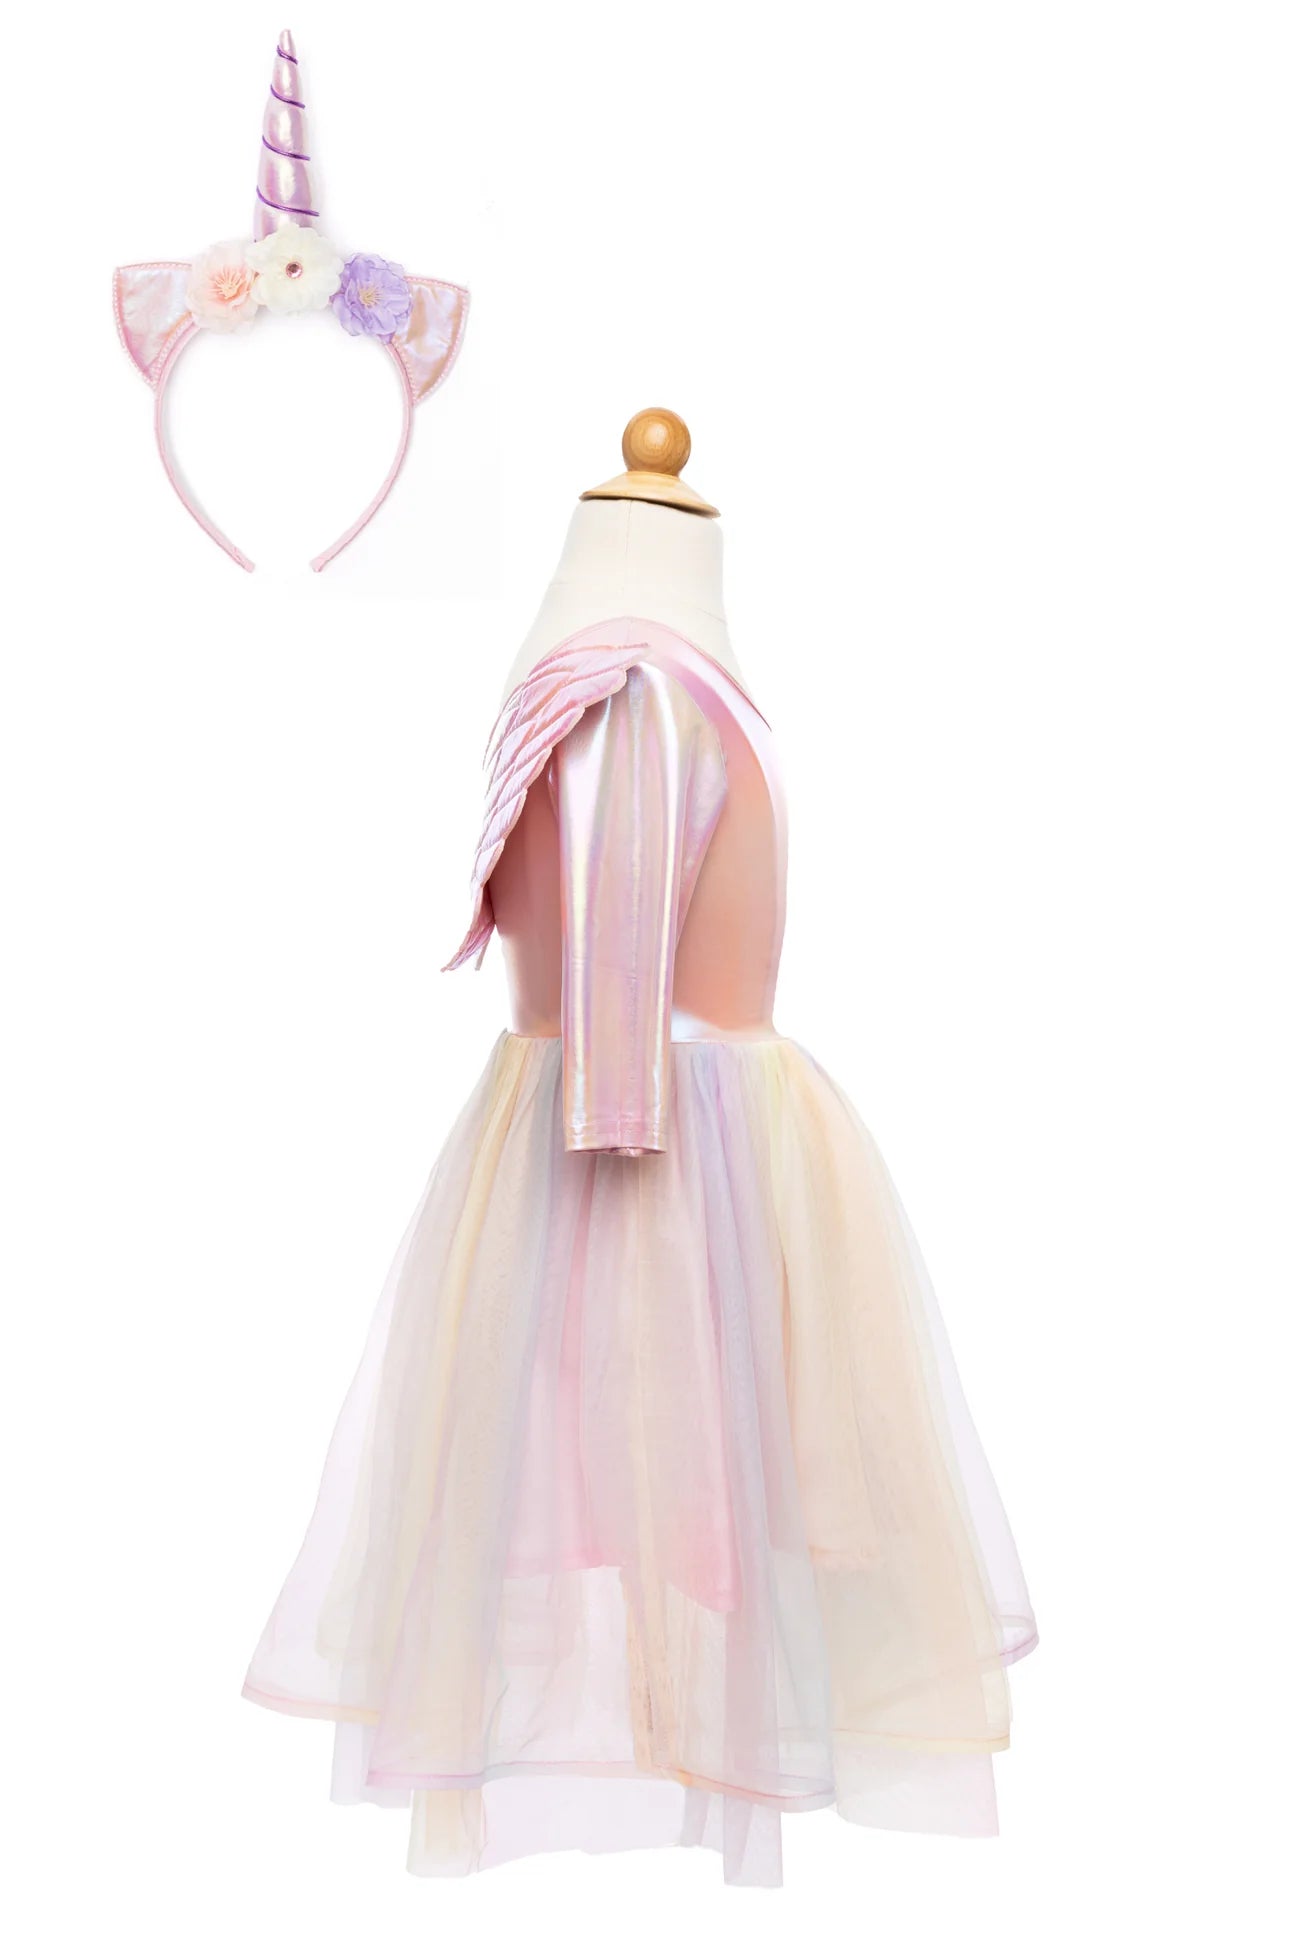 Great Pretenders Alicorn Dress with Wings & Headband Costume Set